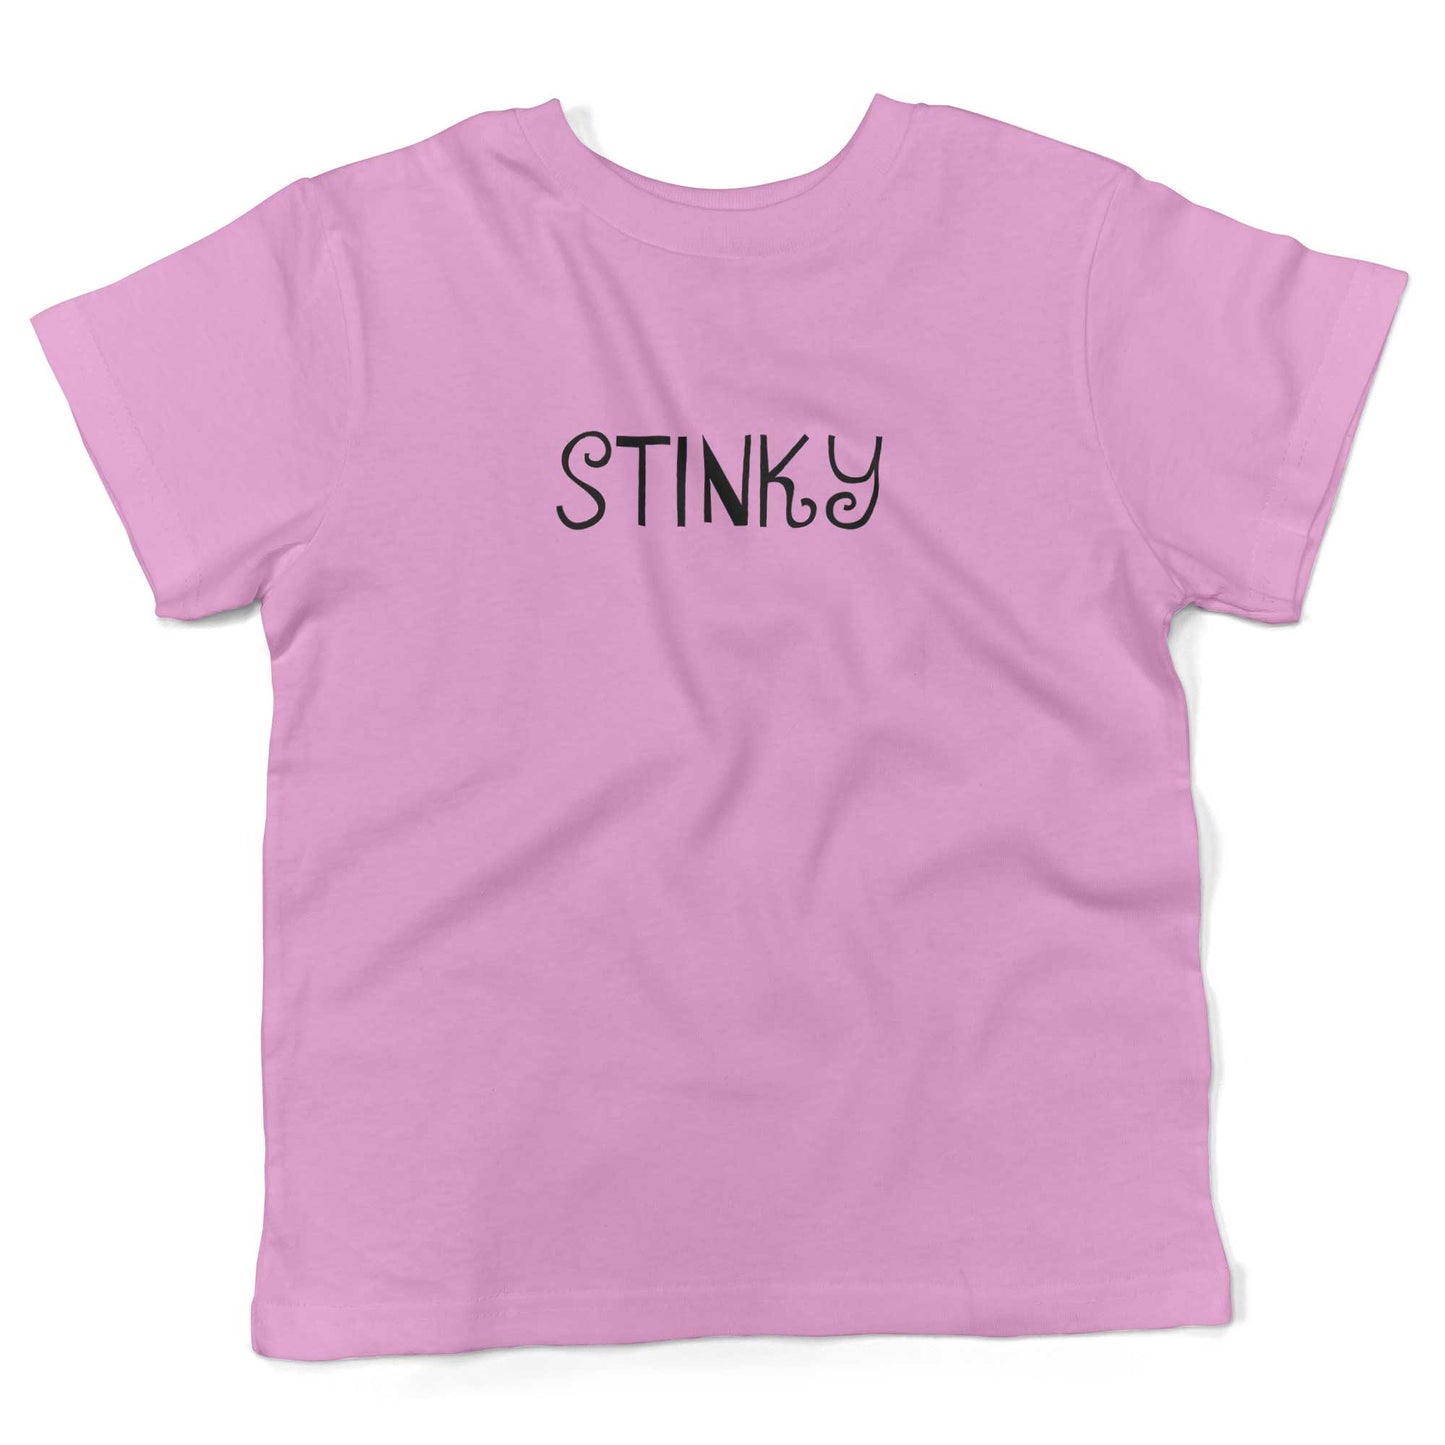 Stinky Toddler Shirt-Organic Pink-2T